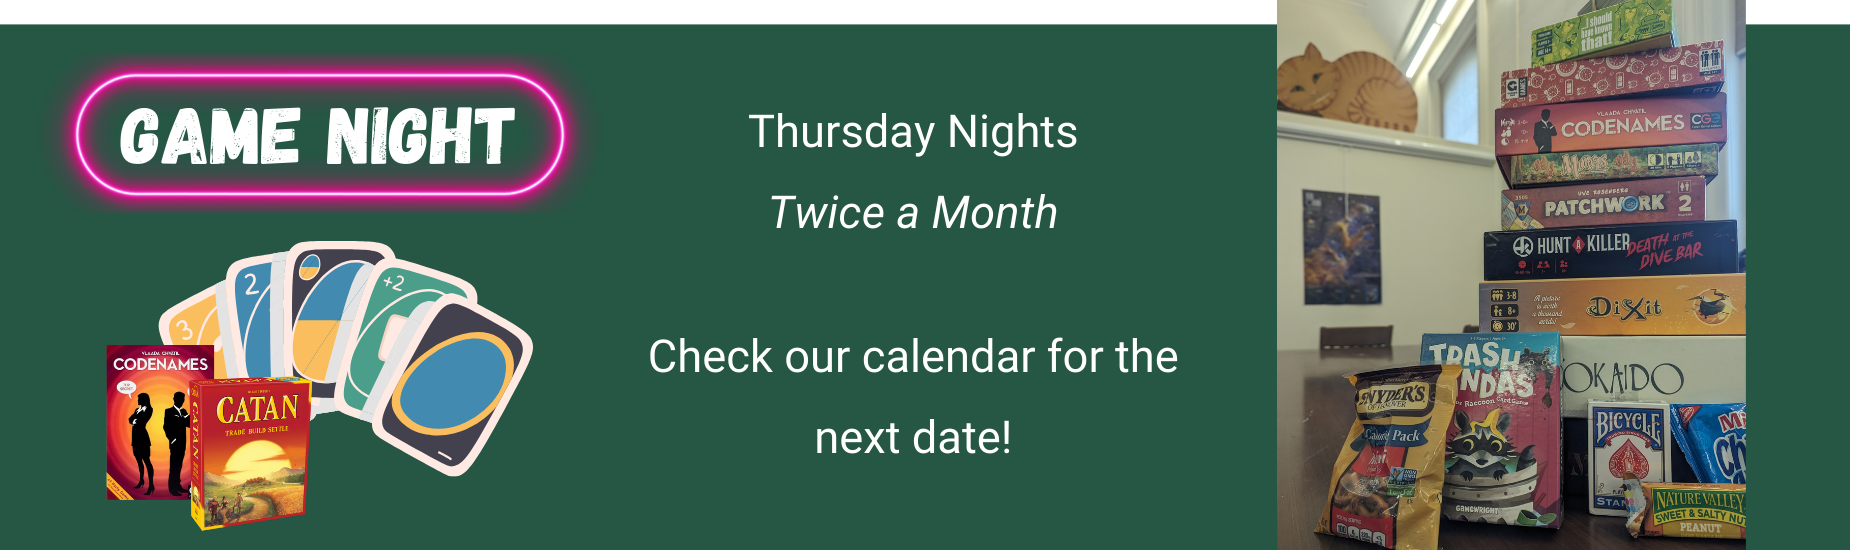 Game Night Thursday nights - see calendar